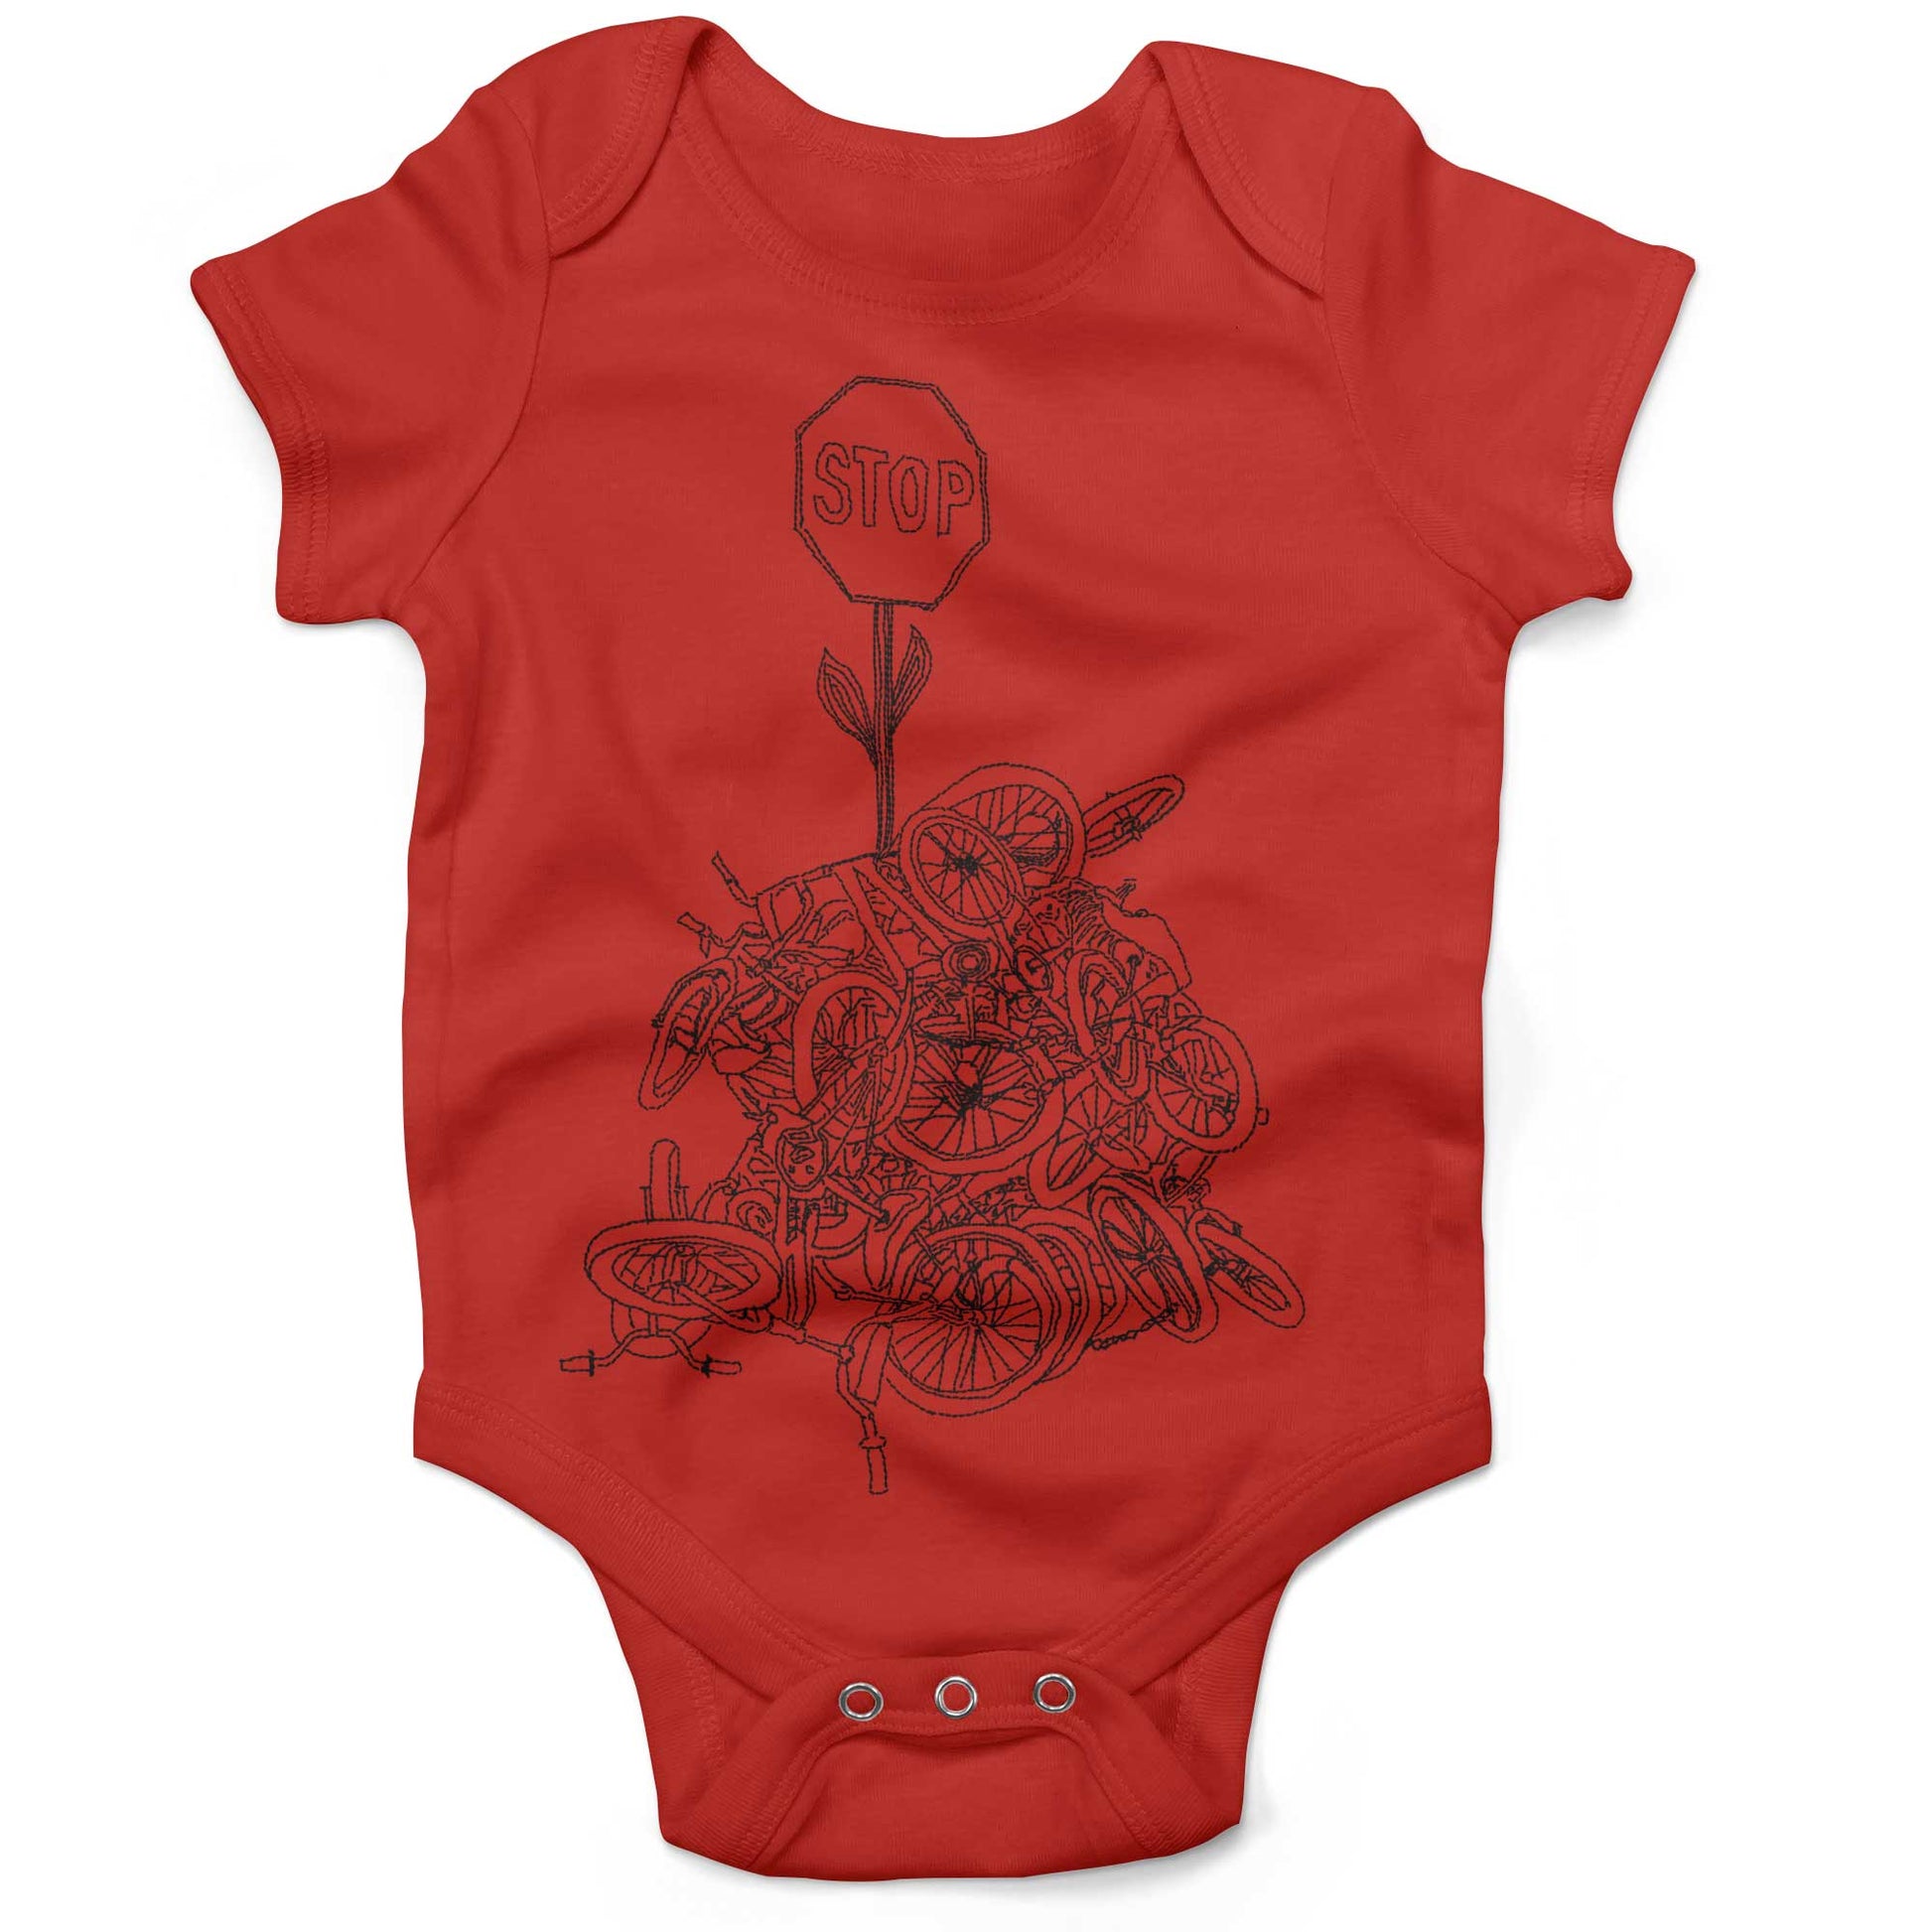 Zoobomber Bike Pyle Infant Bodysuit or Raglan Baby Tee-Organic Red-3-6 months